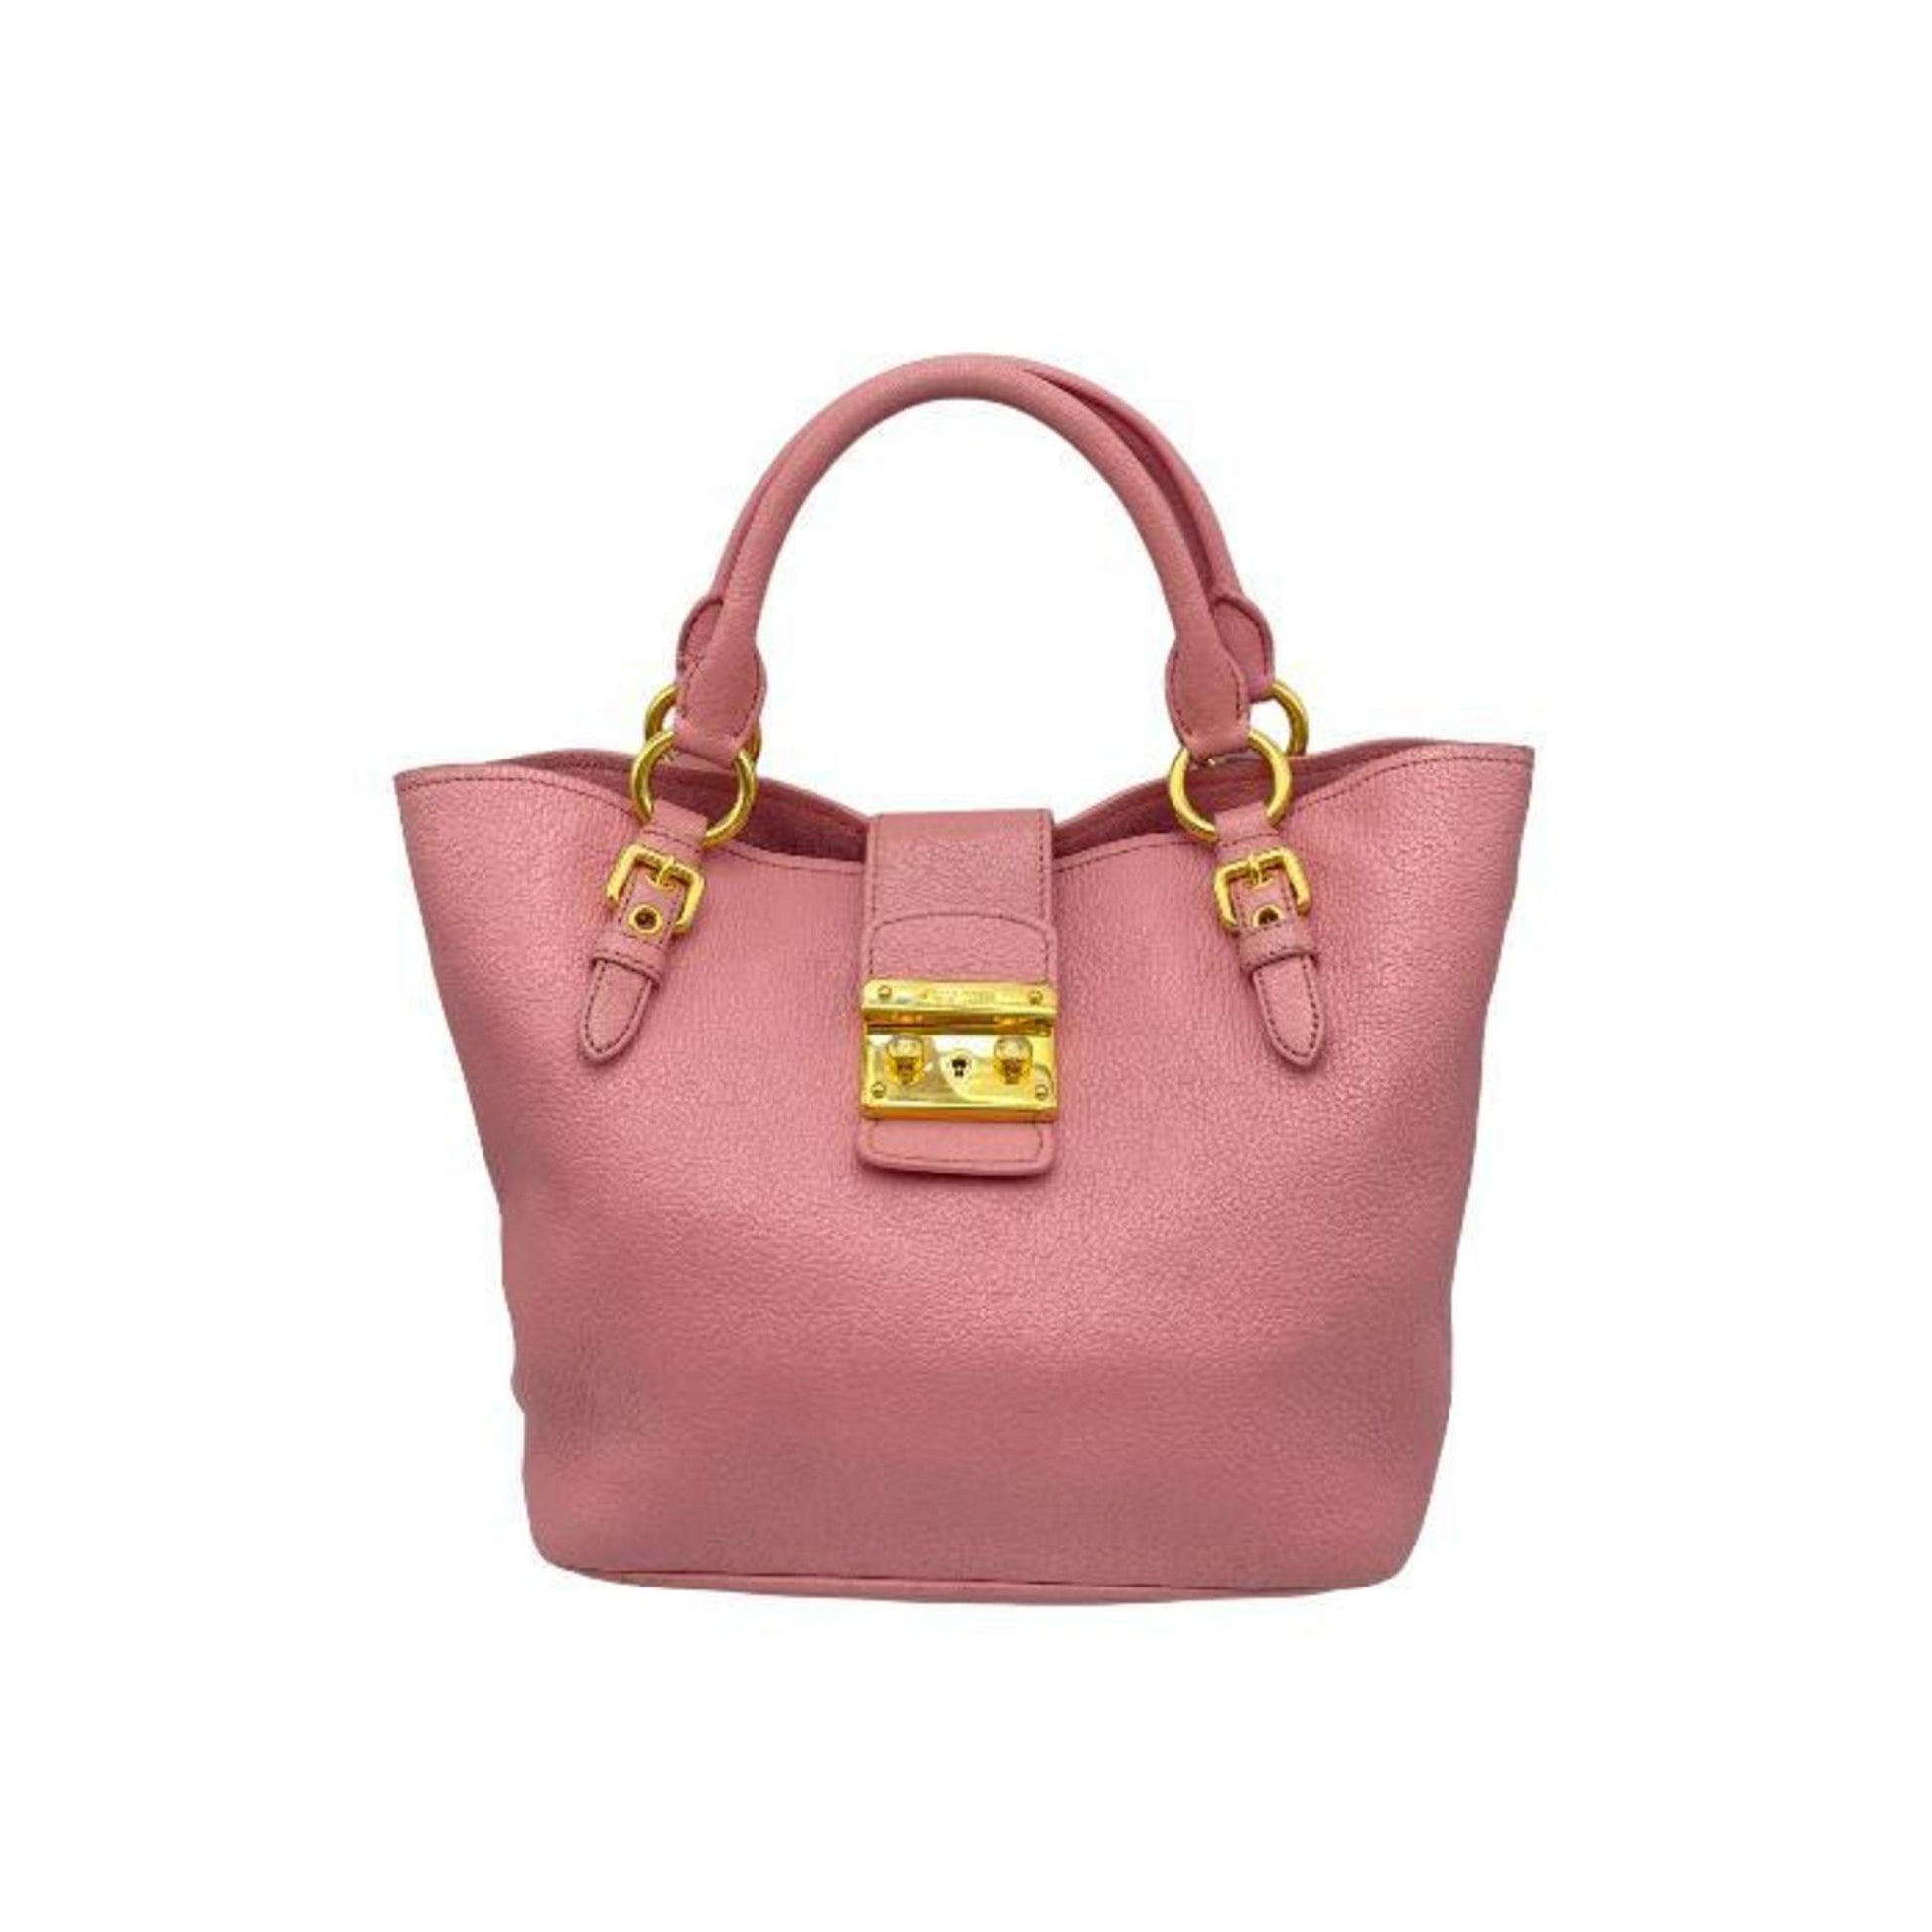 Madras Leather Shoulder Bag in Pink - Miu Miu